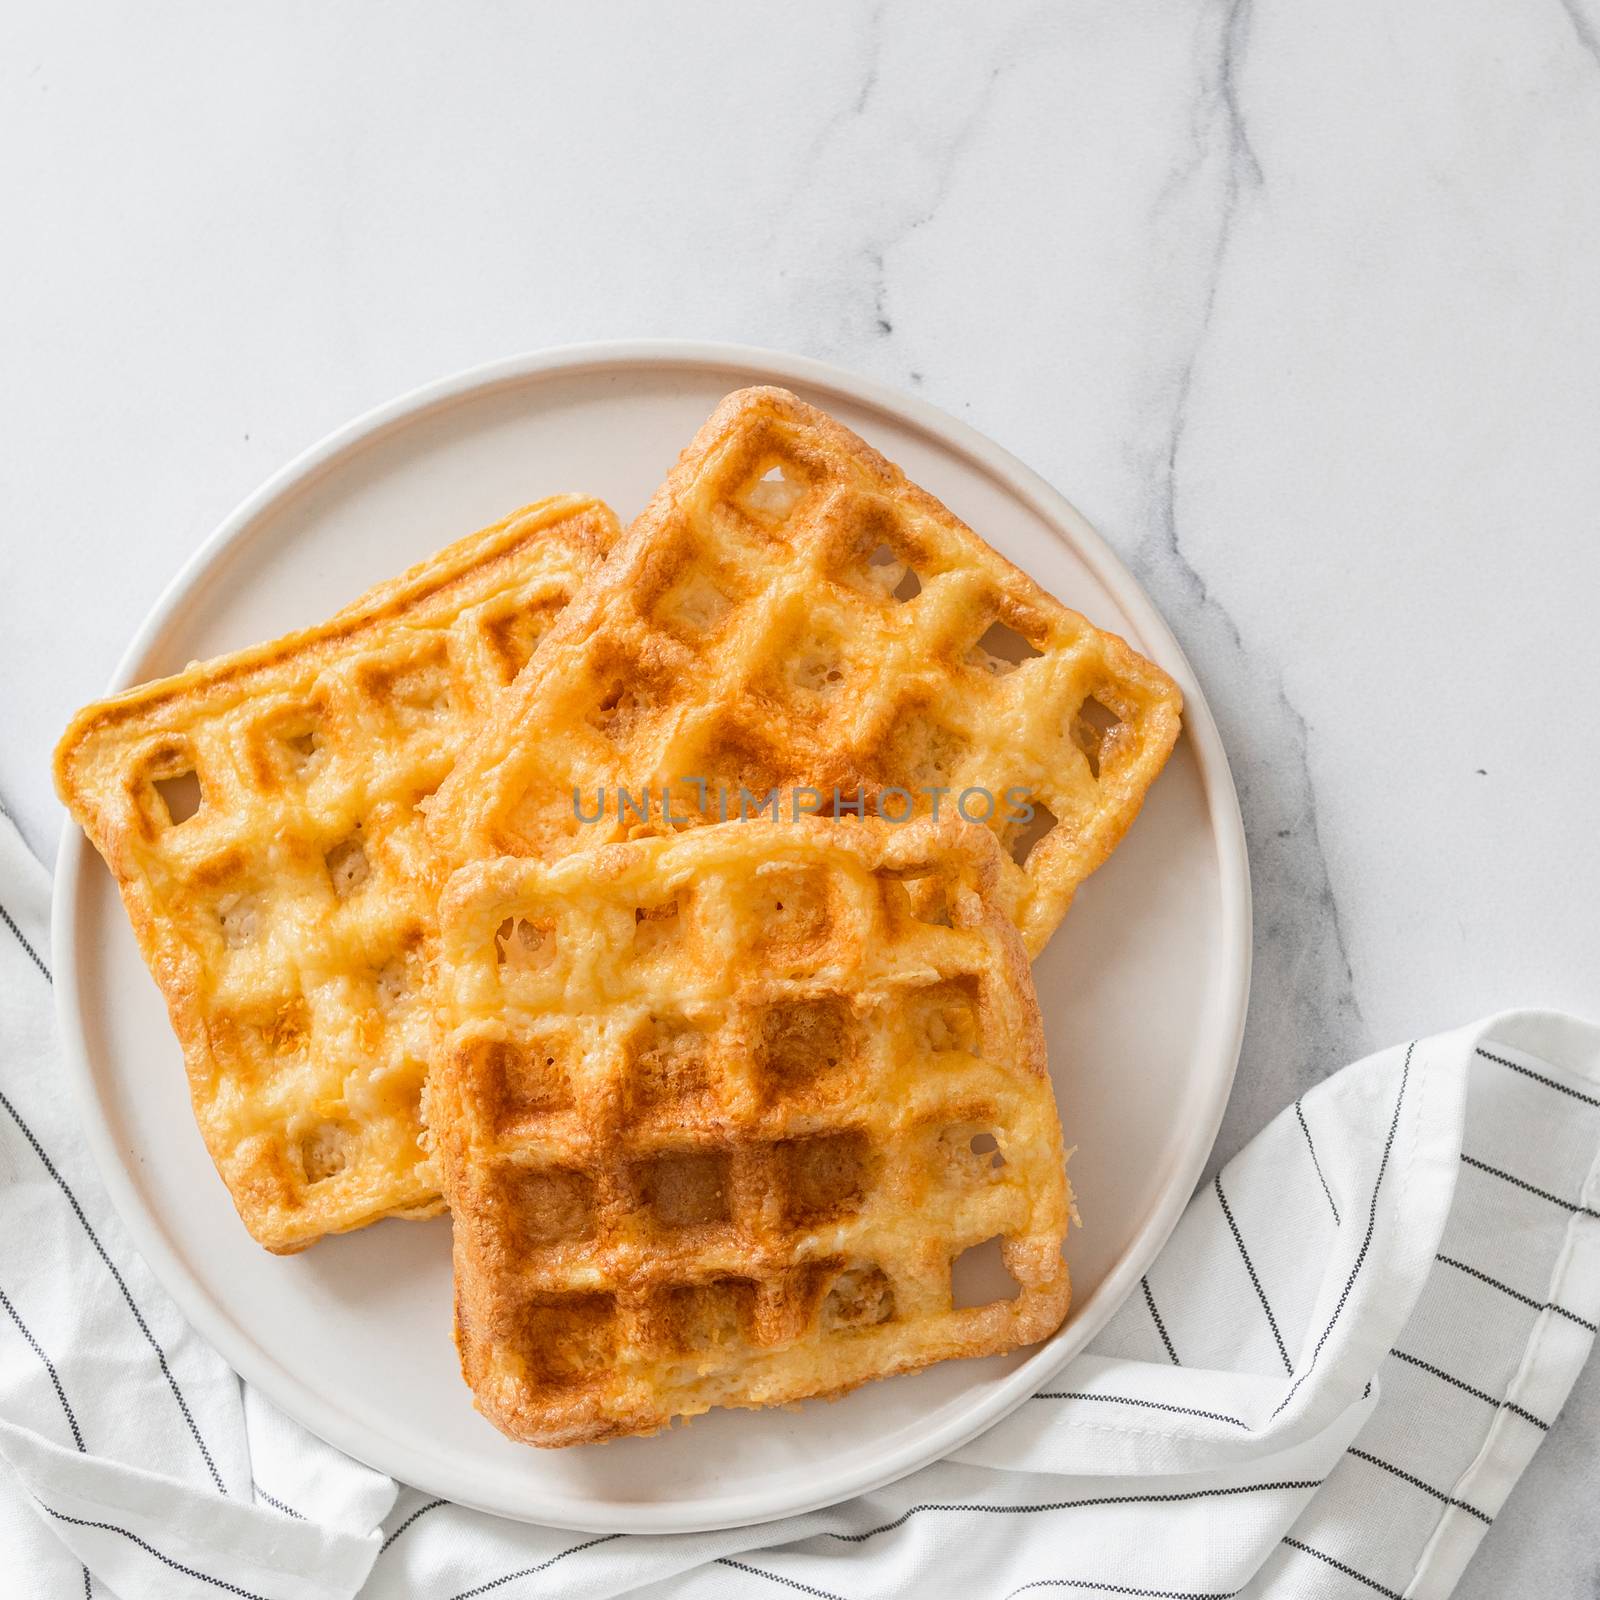 Savory keto two ingredients waffles - chaffles by fascinadora